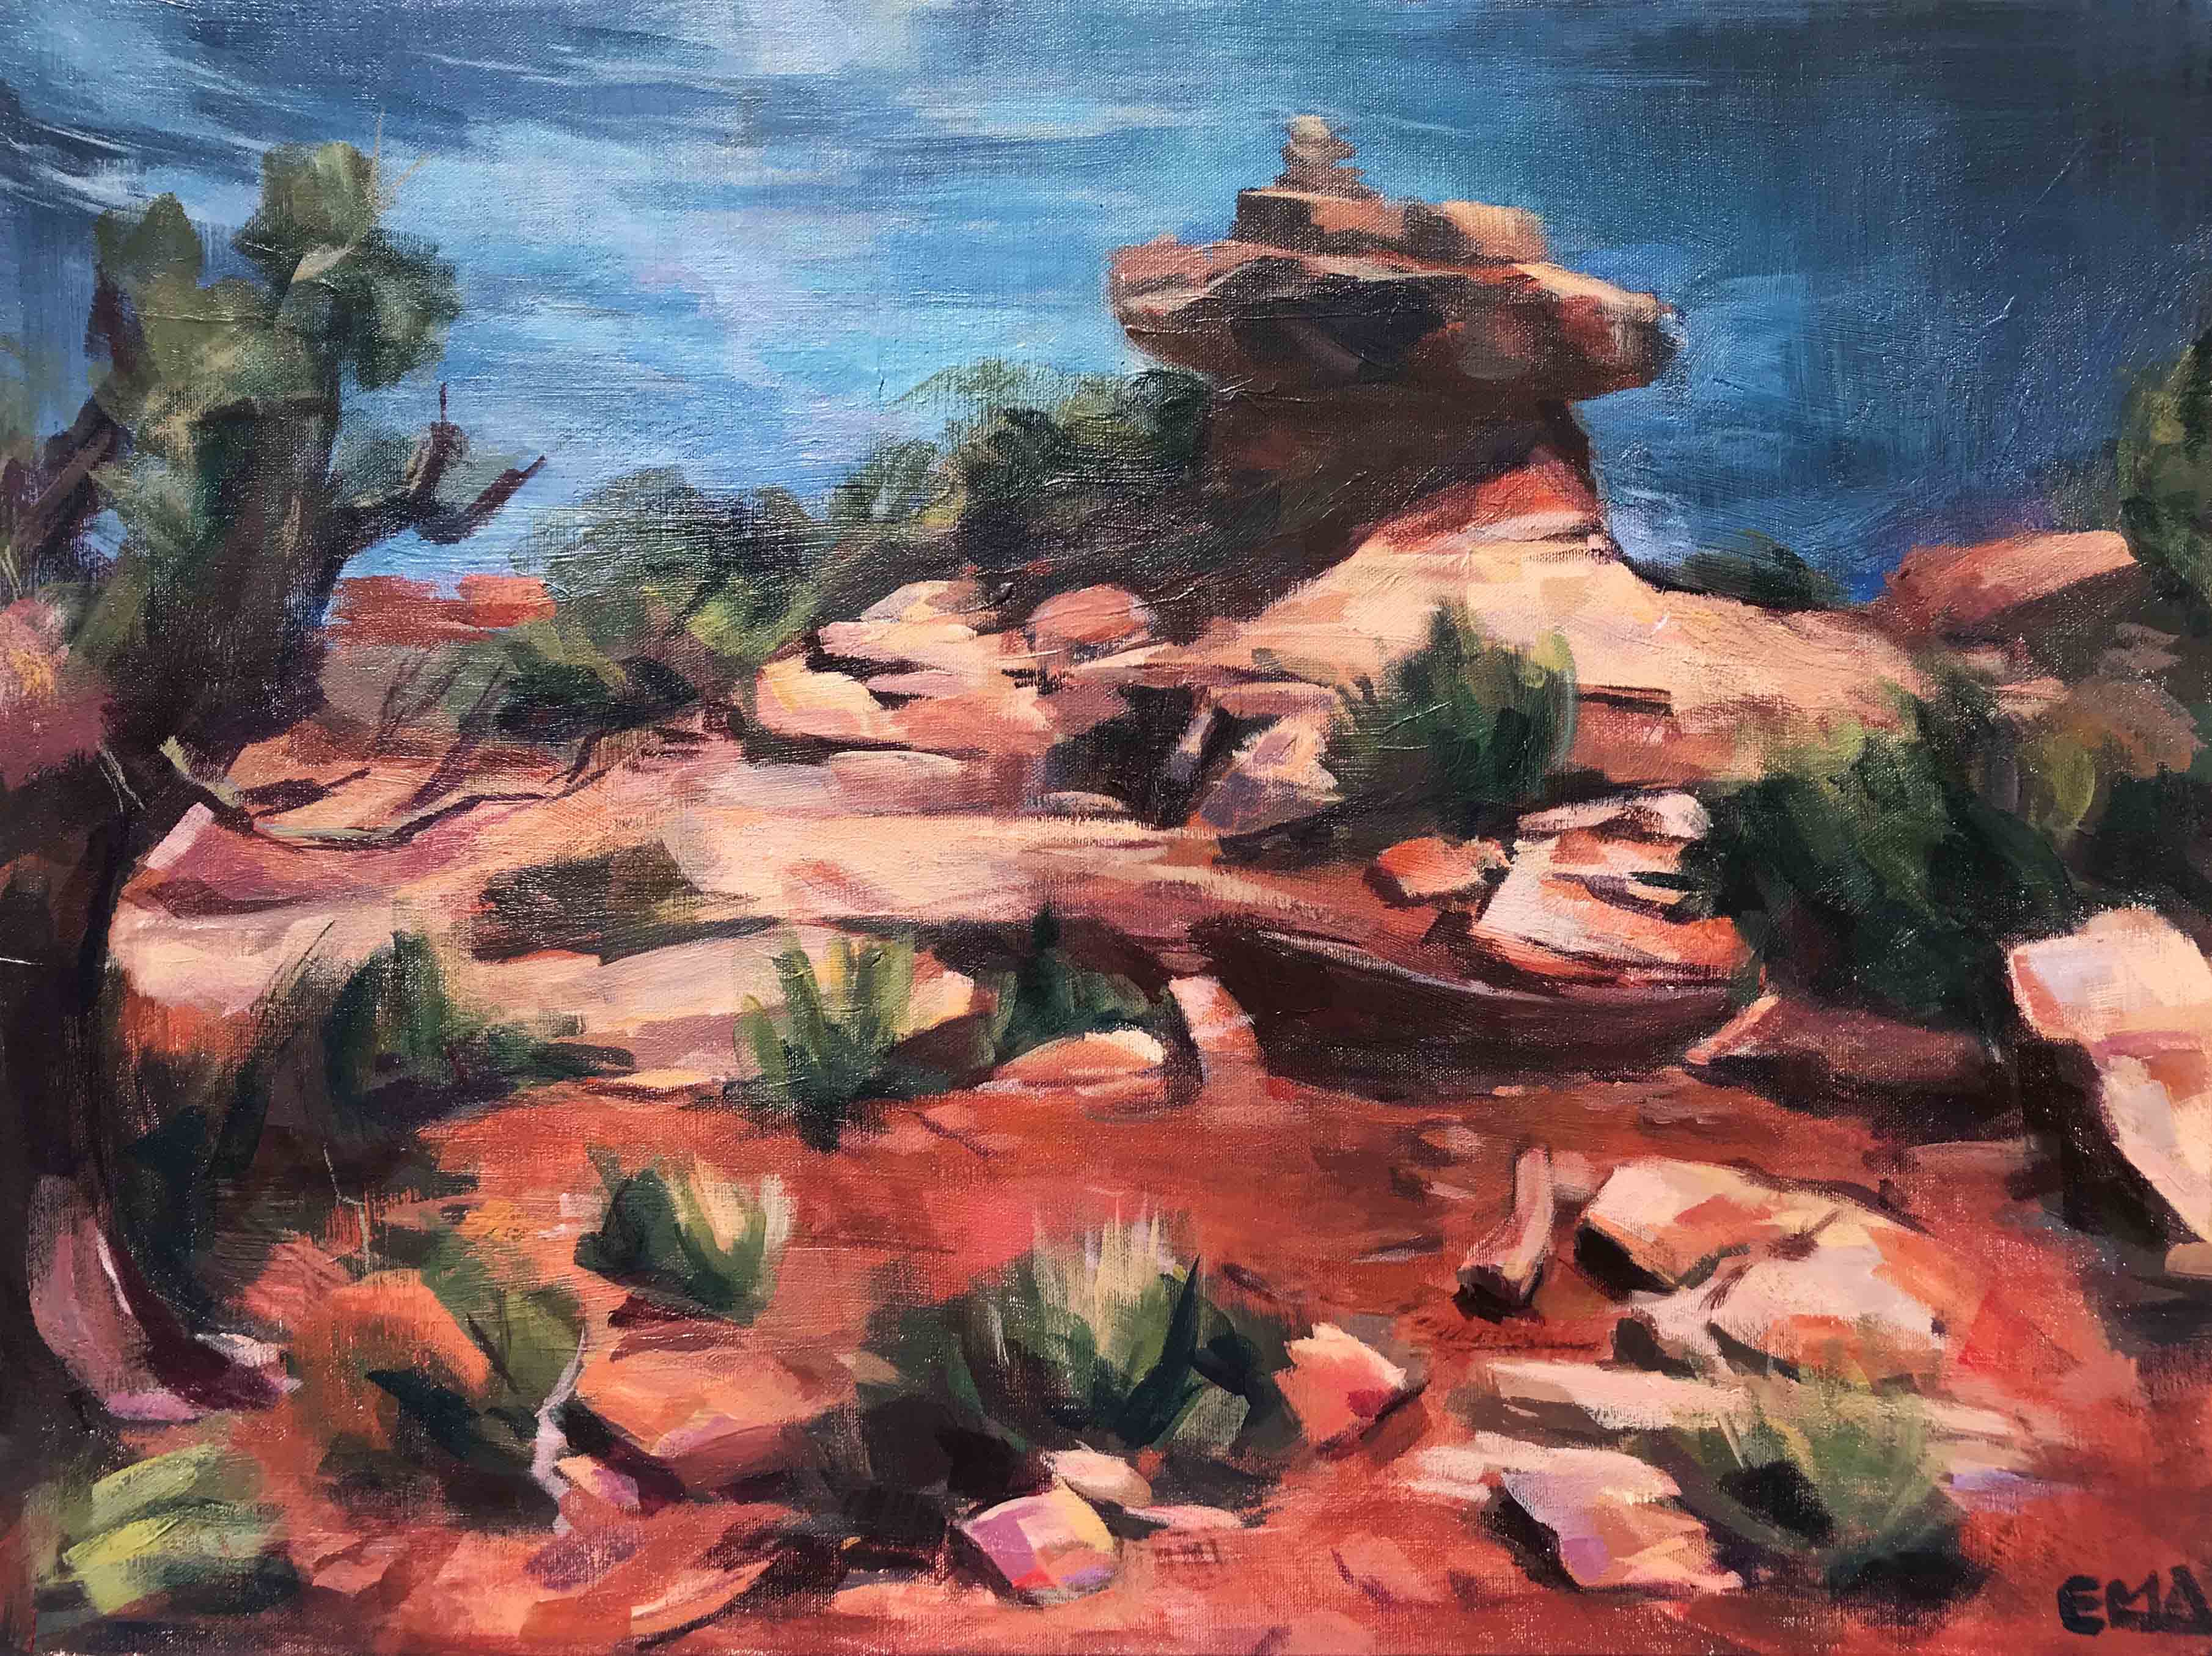 A landscape painting of a desert